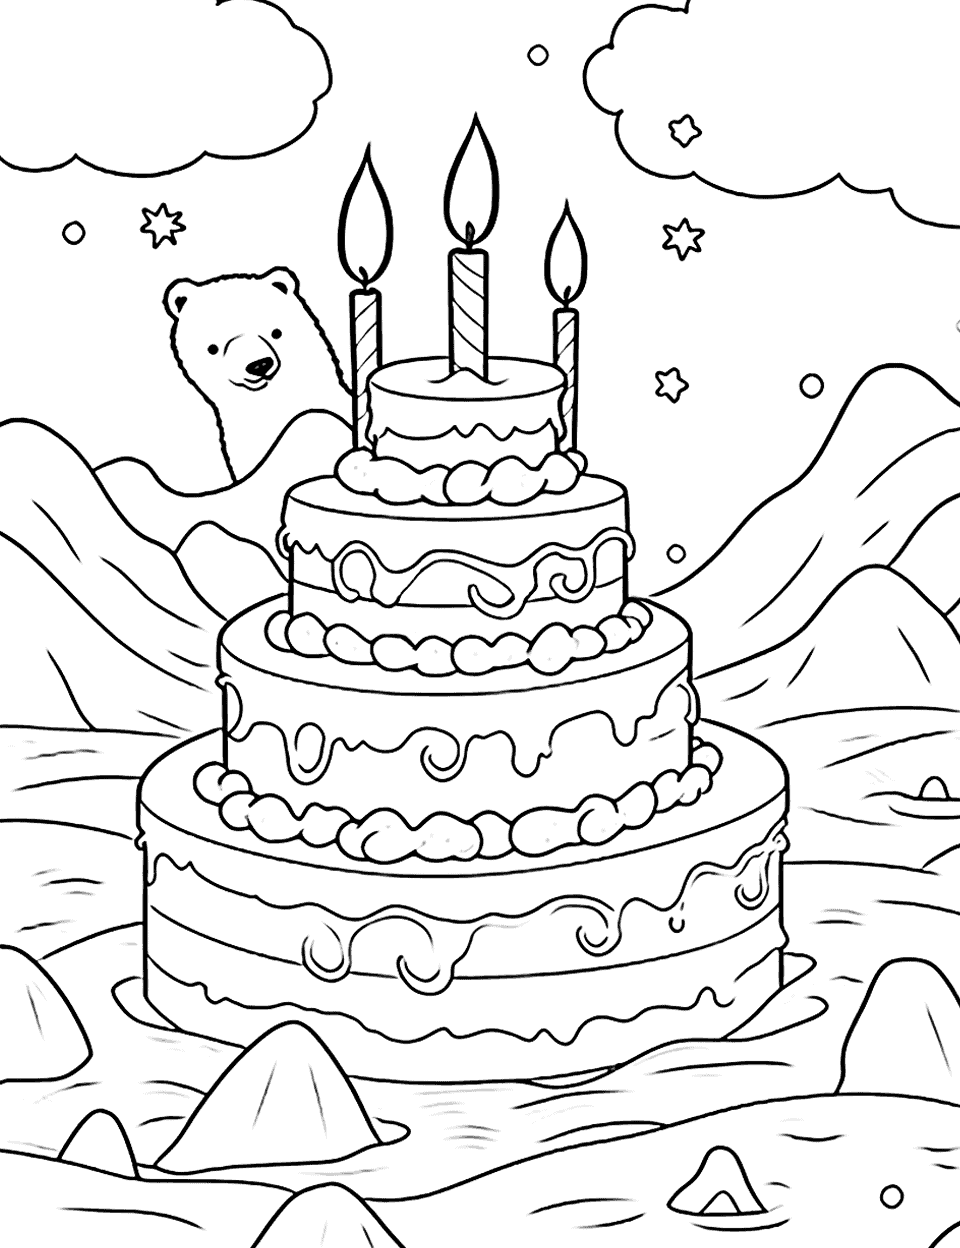 Polar Bear's Iceberg Birthday Happy Coloring Page - A polar bear celebrating its birthday on an iceberg with a giant cake.